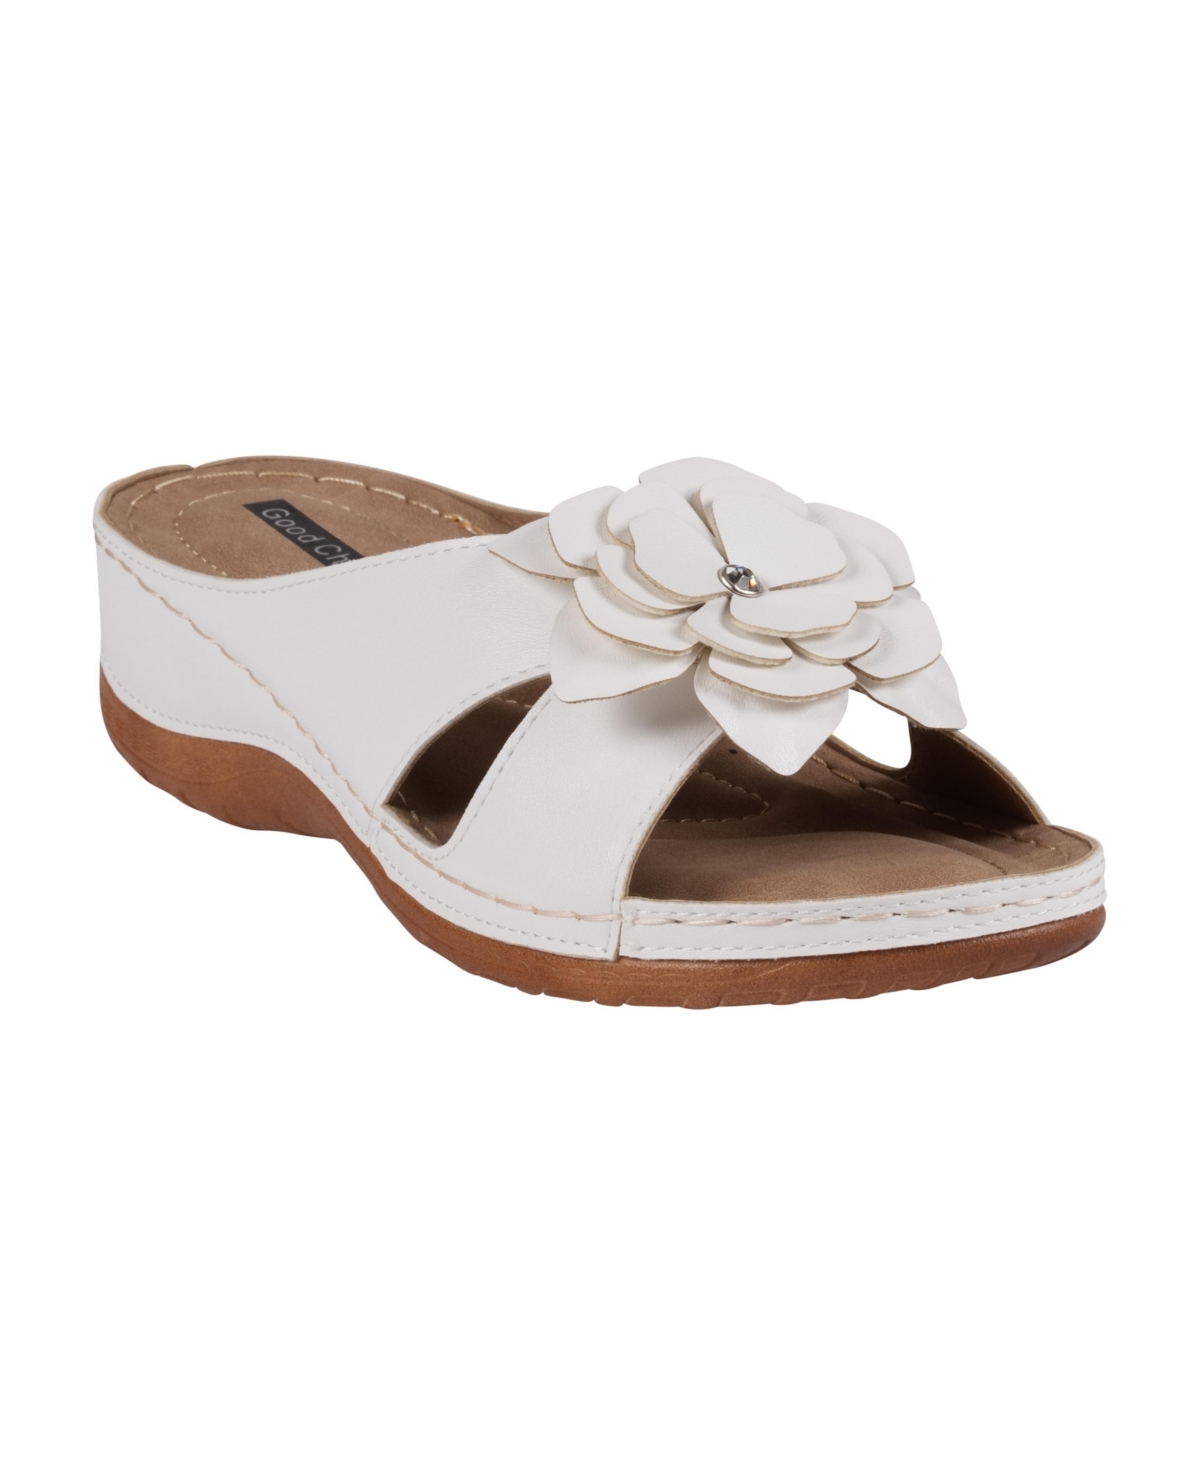 Women's Joy Flower Rosette Comfort Sandals - Coral